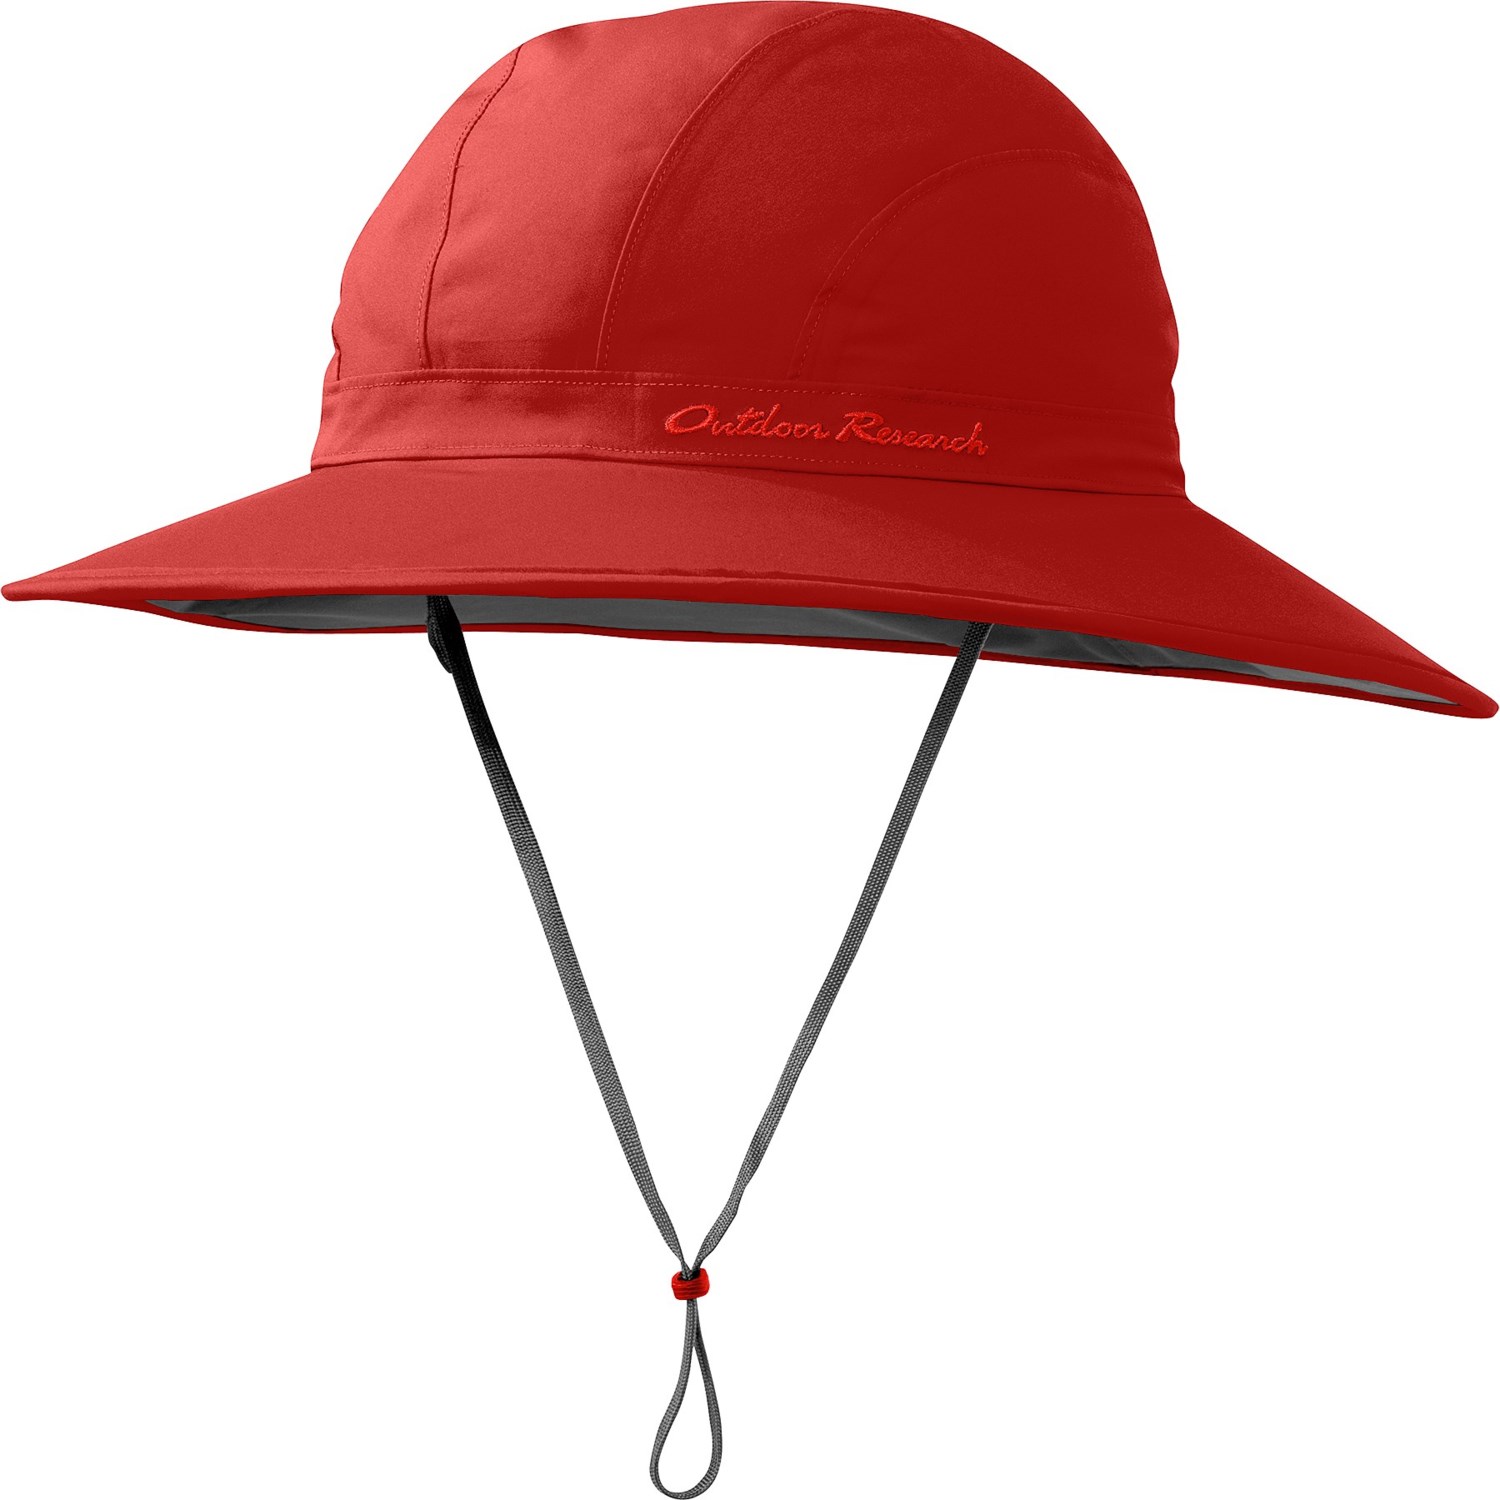 Outdoor Research Raindance Gore-Tex® Sombrero Hat (For Women) - Save 41%